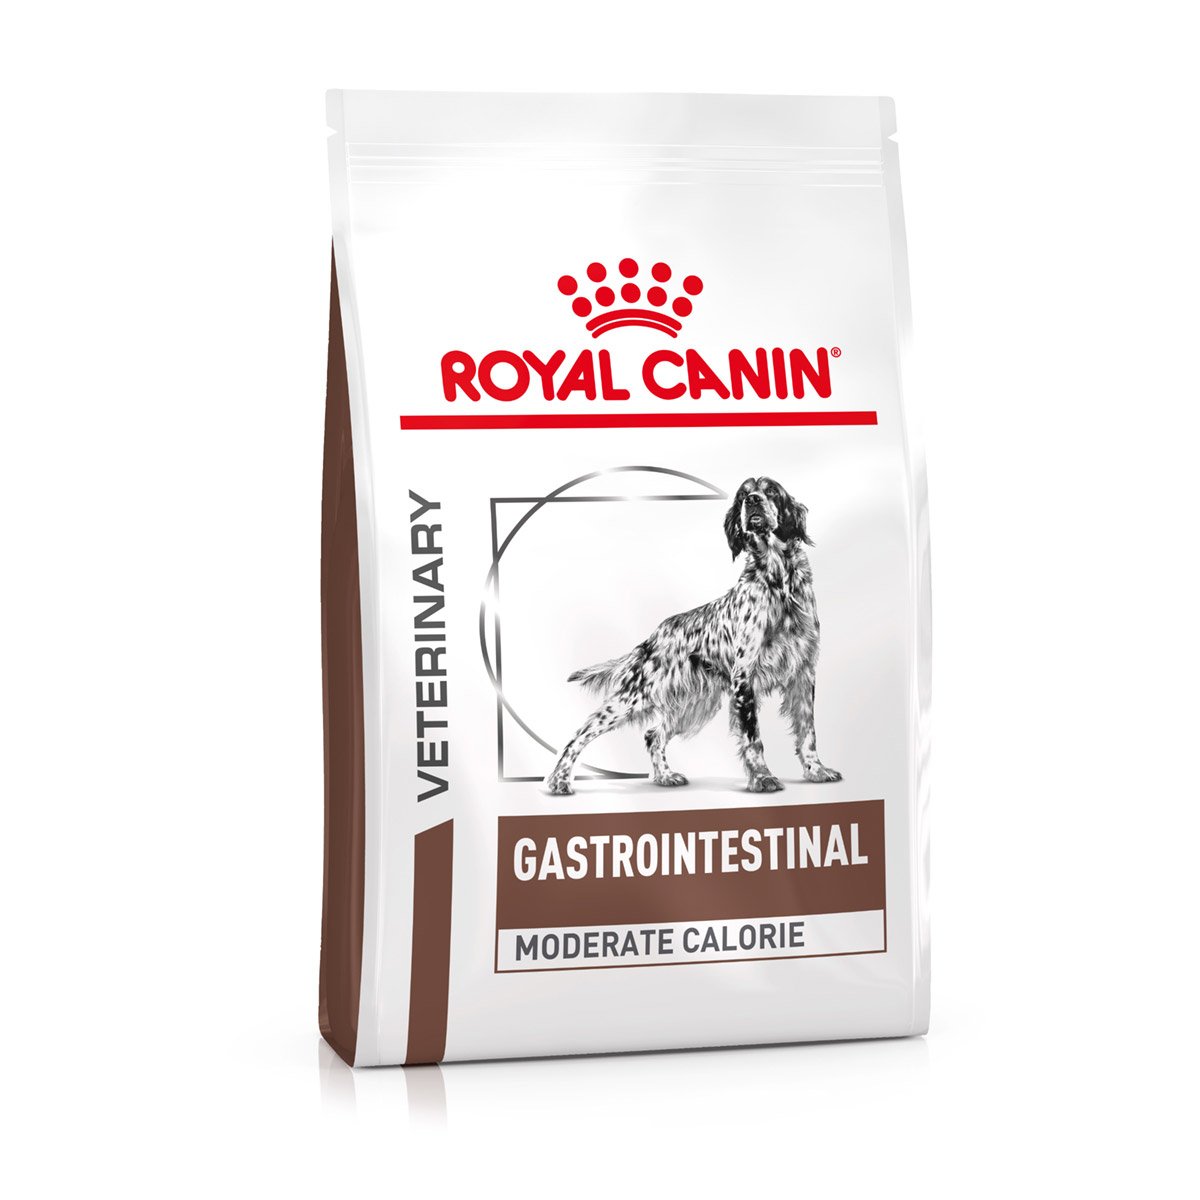 ROYAL CANIN® Veterinary GASTROINTESTINAL MODERATE CALORIE Trockenfutter für Hunde 7,5kg von Royal Canin